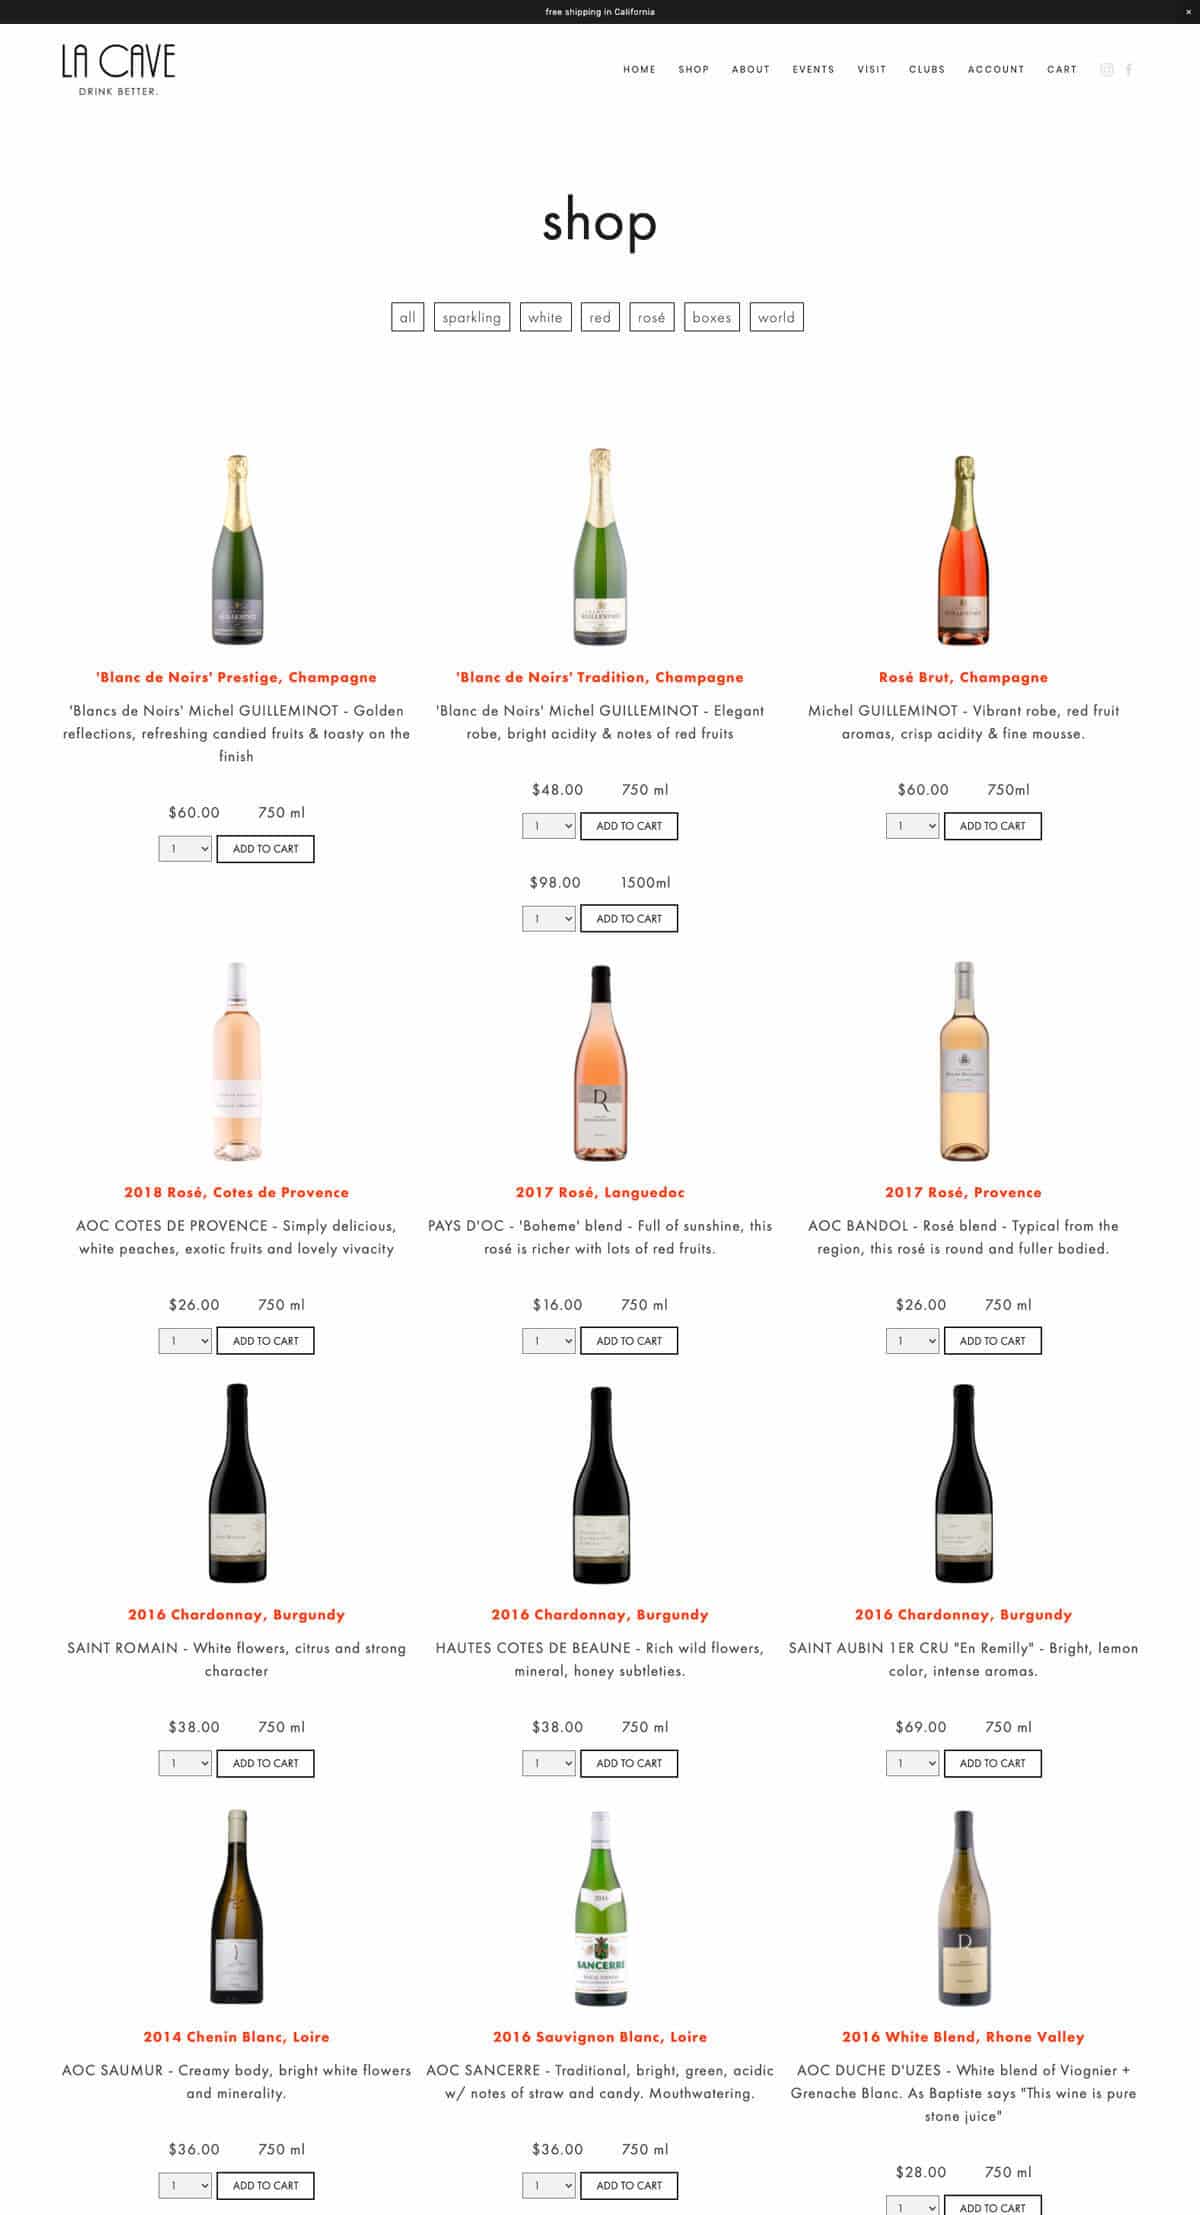 la-cave-shop-page-wine-marketing-vinespring-1